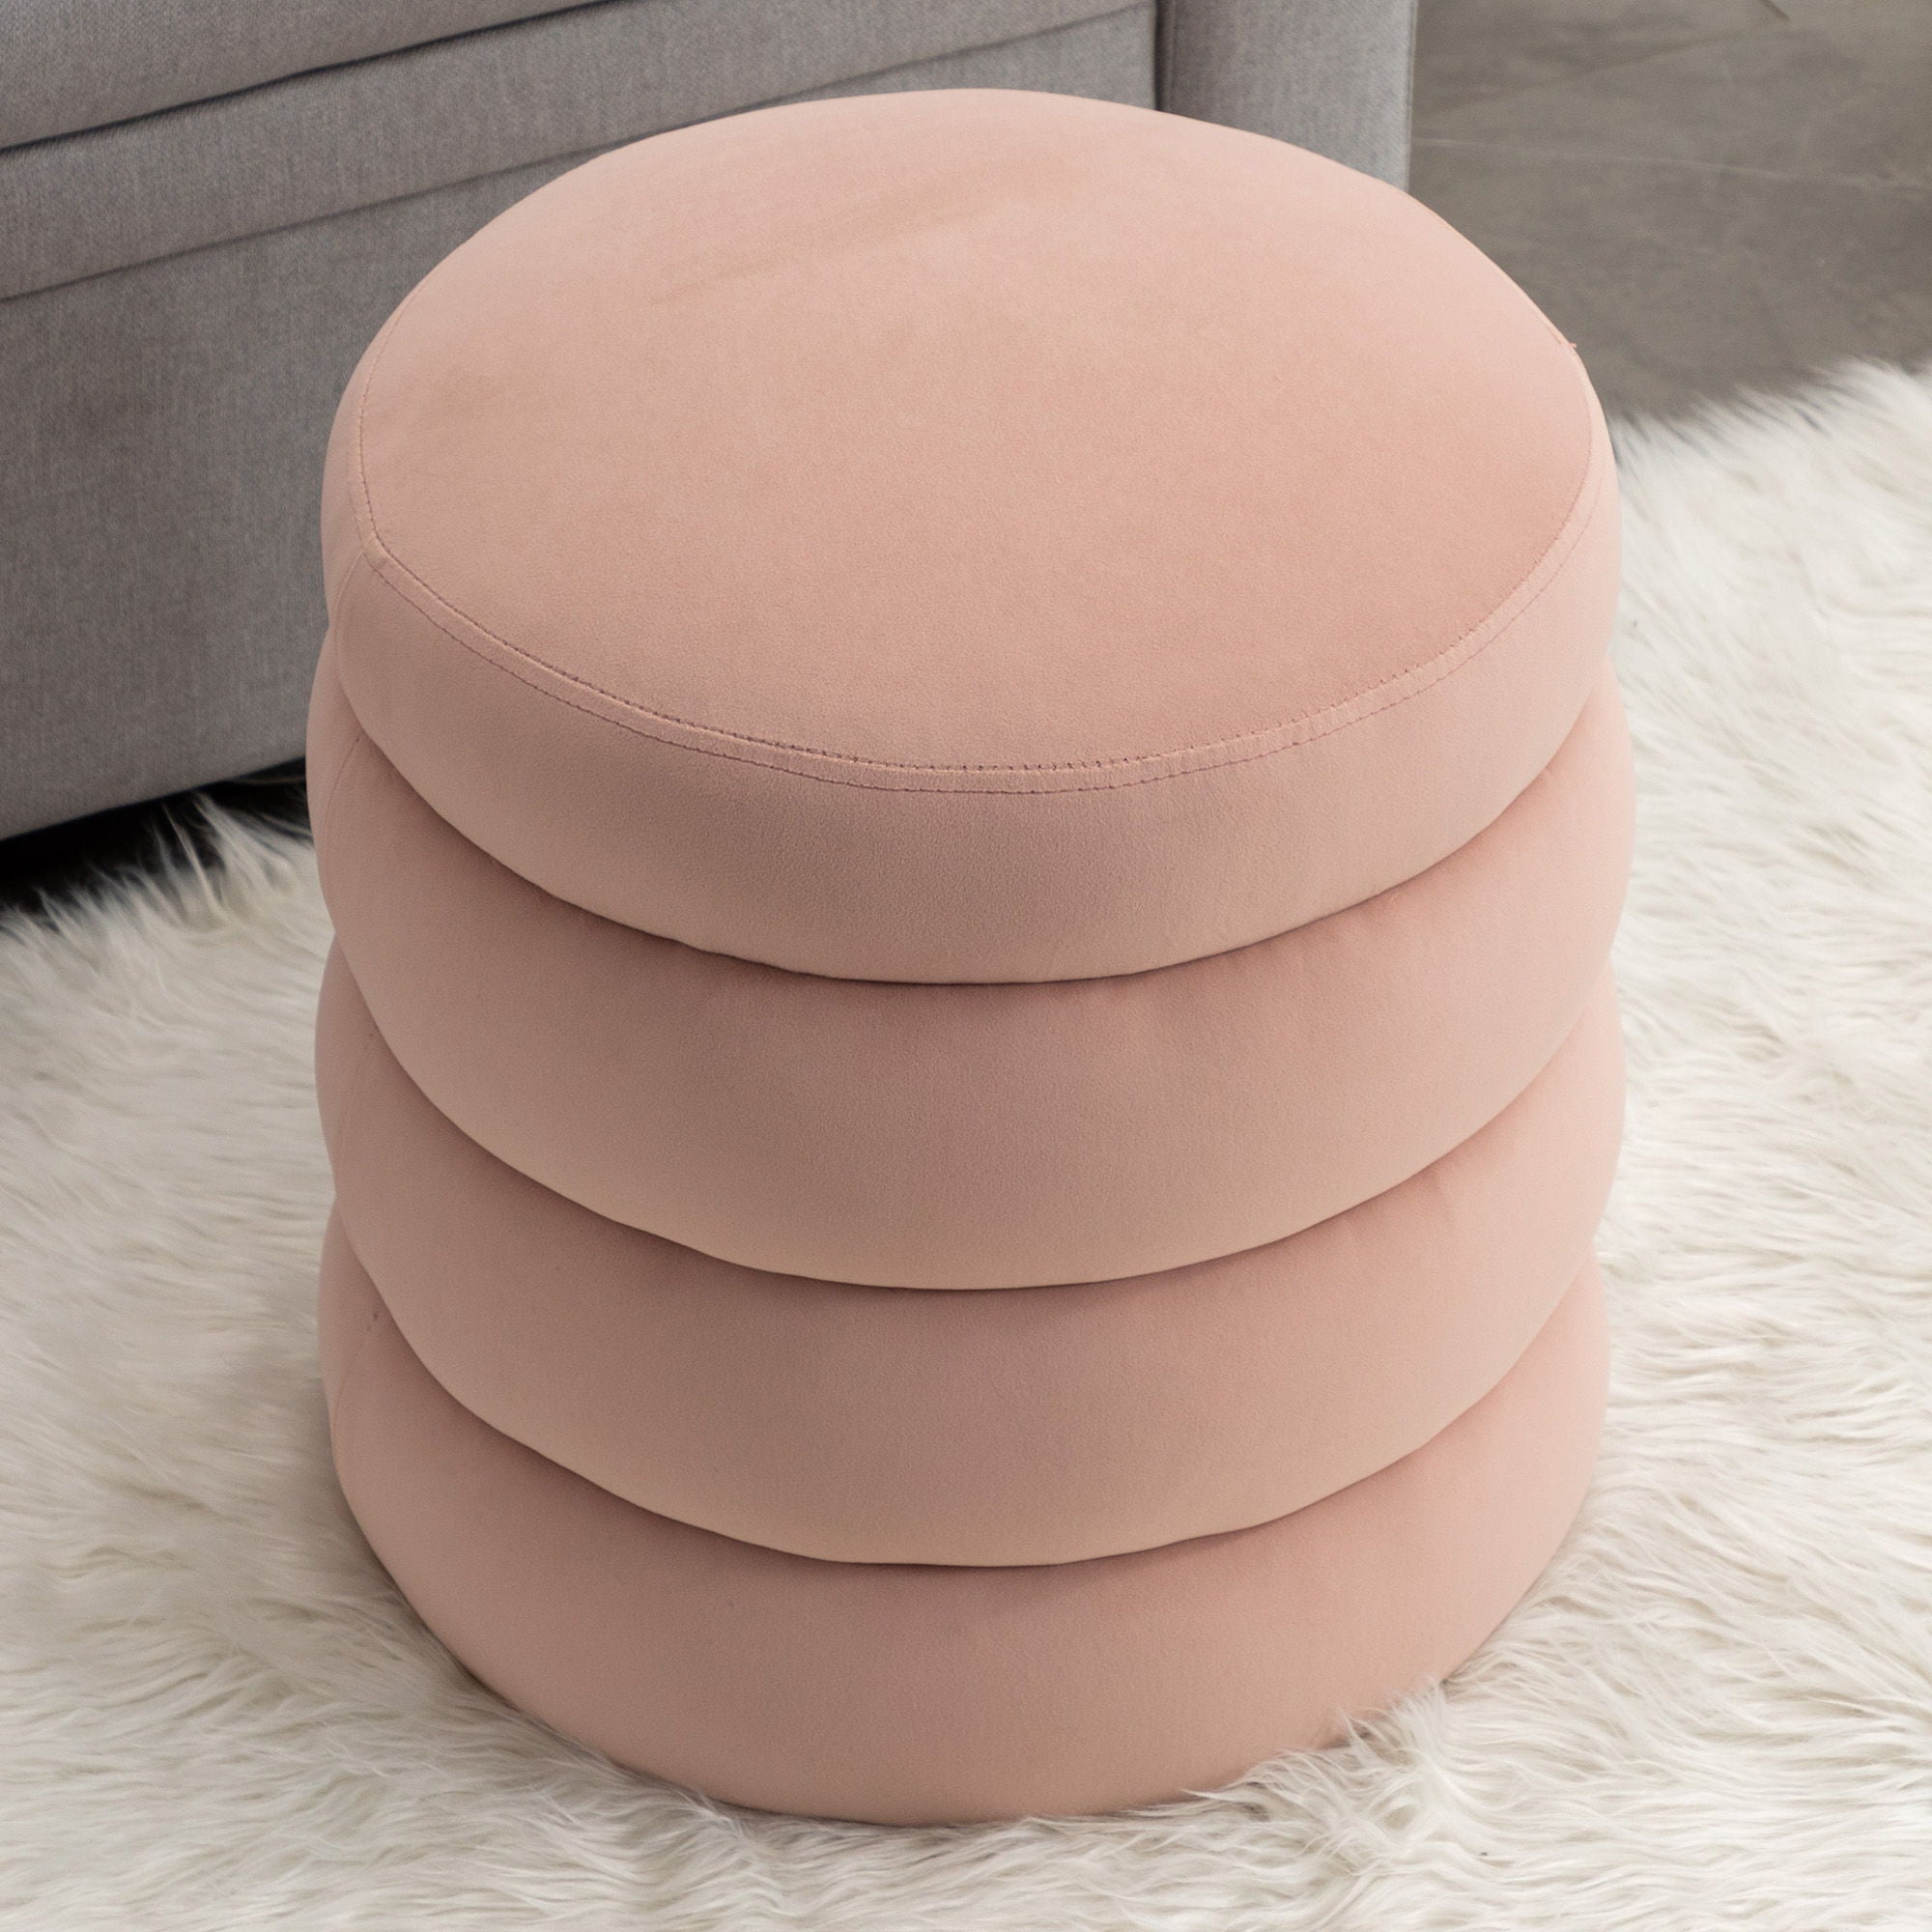 Soft Velvet Round Ottoman Footrest Stool, Pink